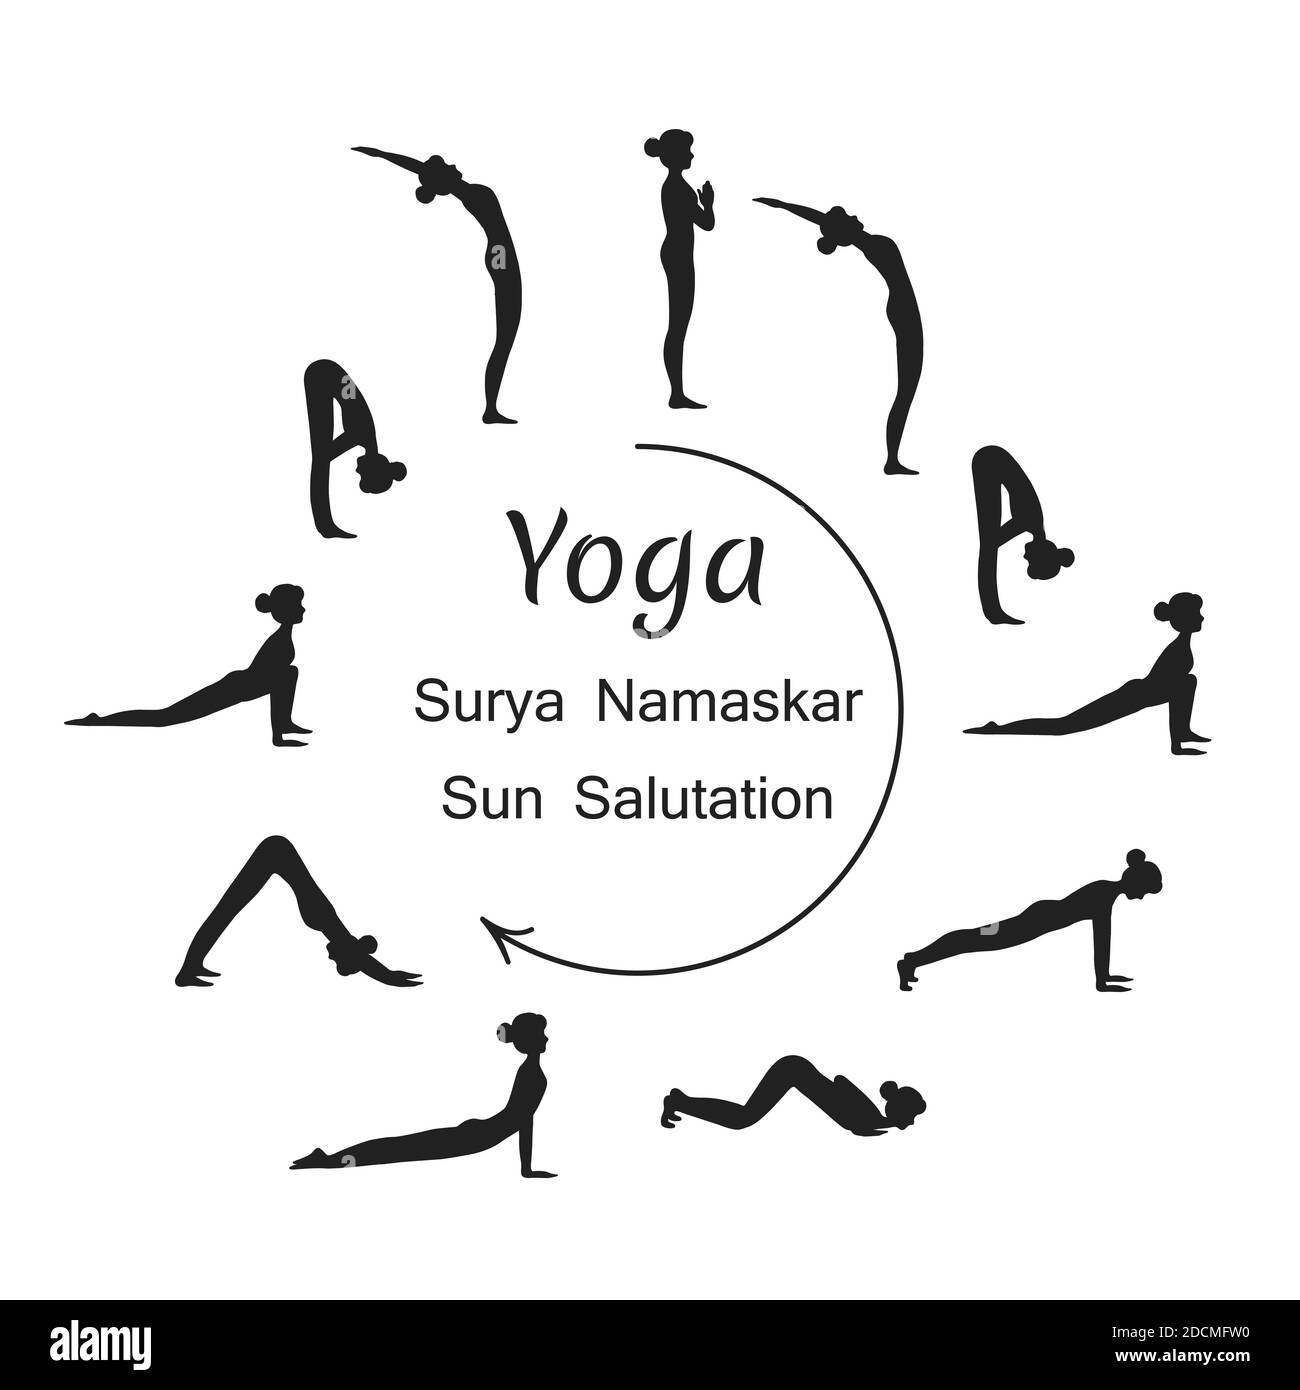 12 Different Mantras of Surya Namaskar Yoga Poses | Radhe Radhe